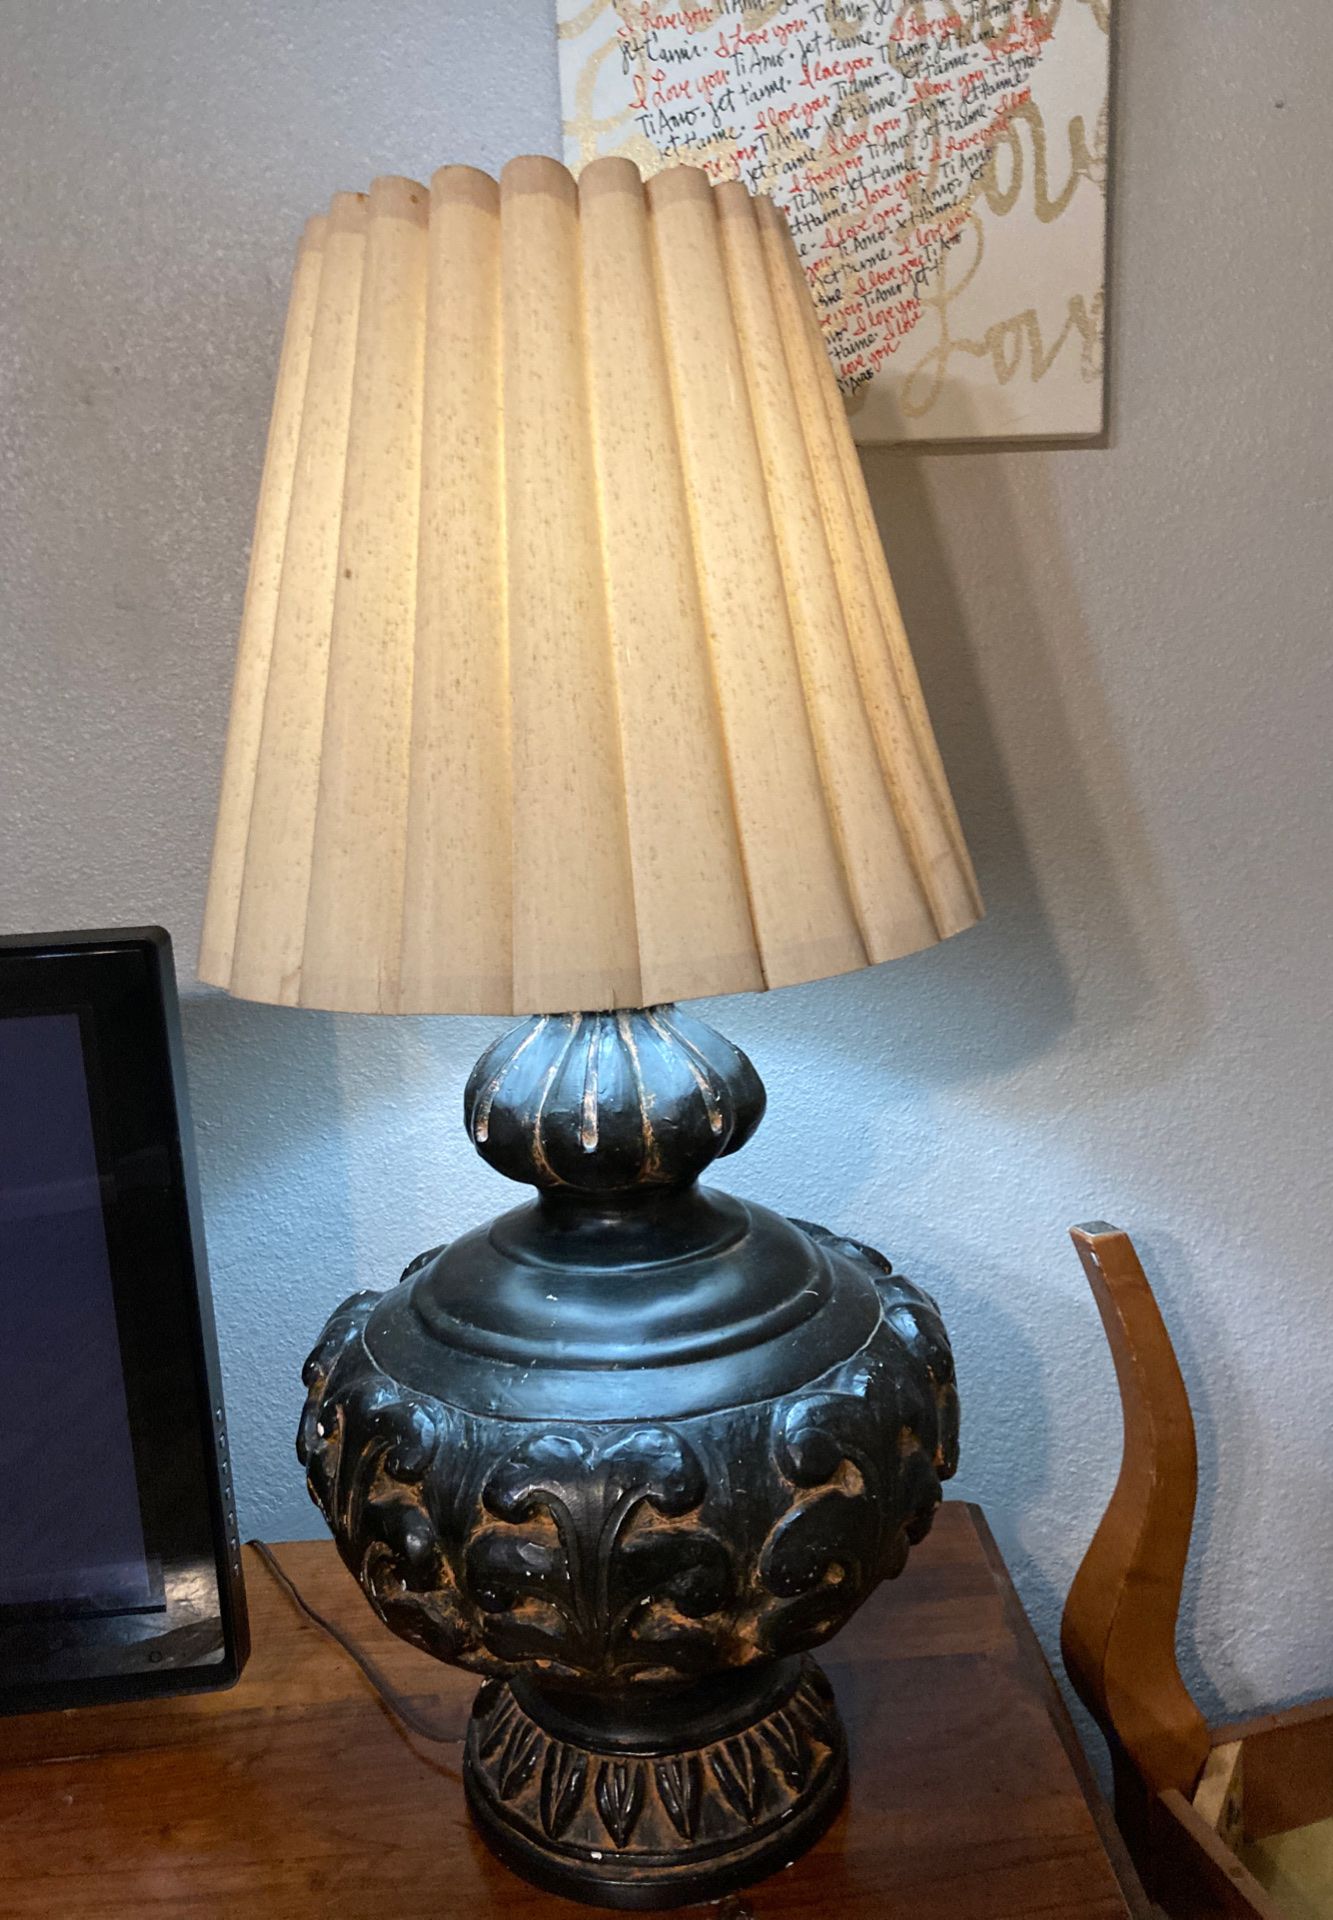 Heavy old school lamp